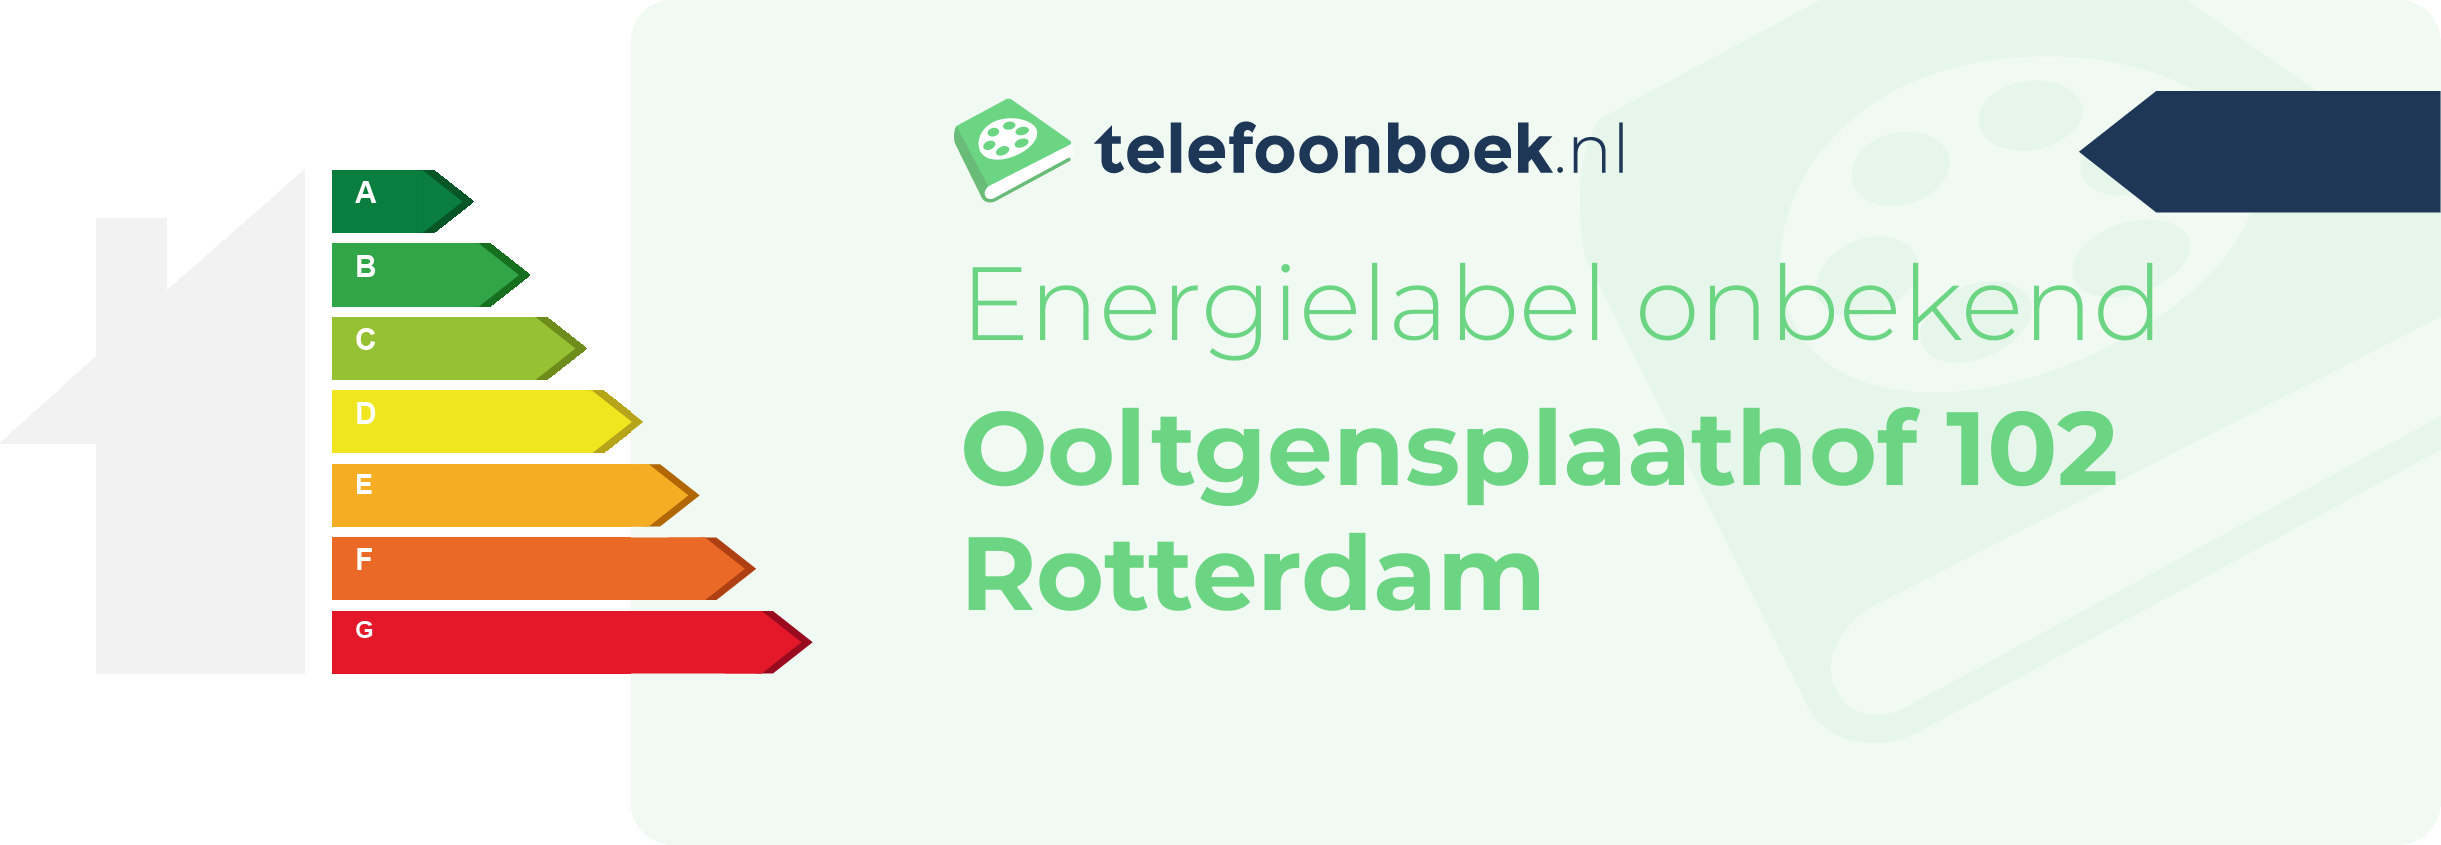 Energielabel Ooltgensplaathof 102 Rotterdam